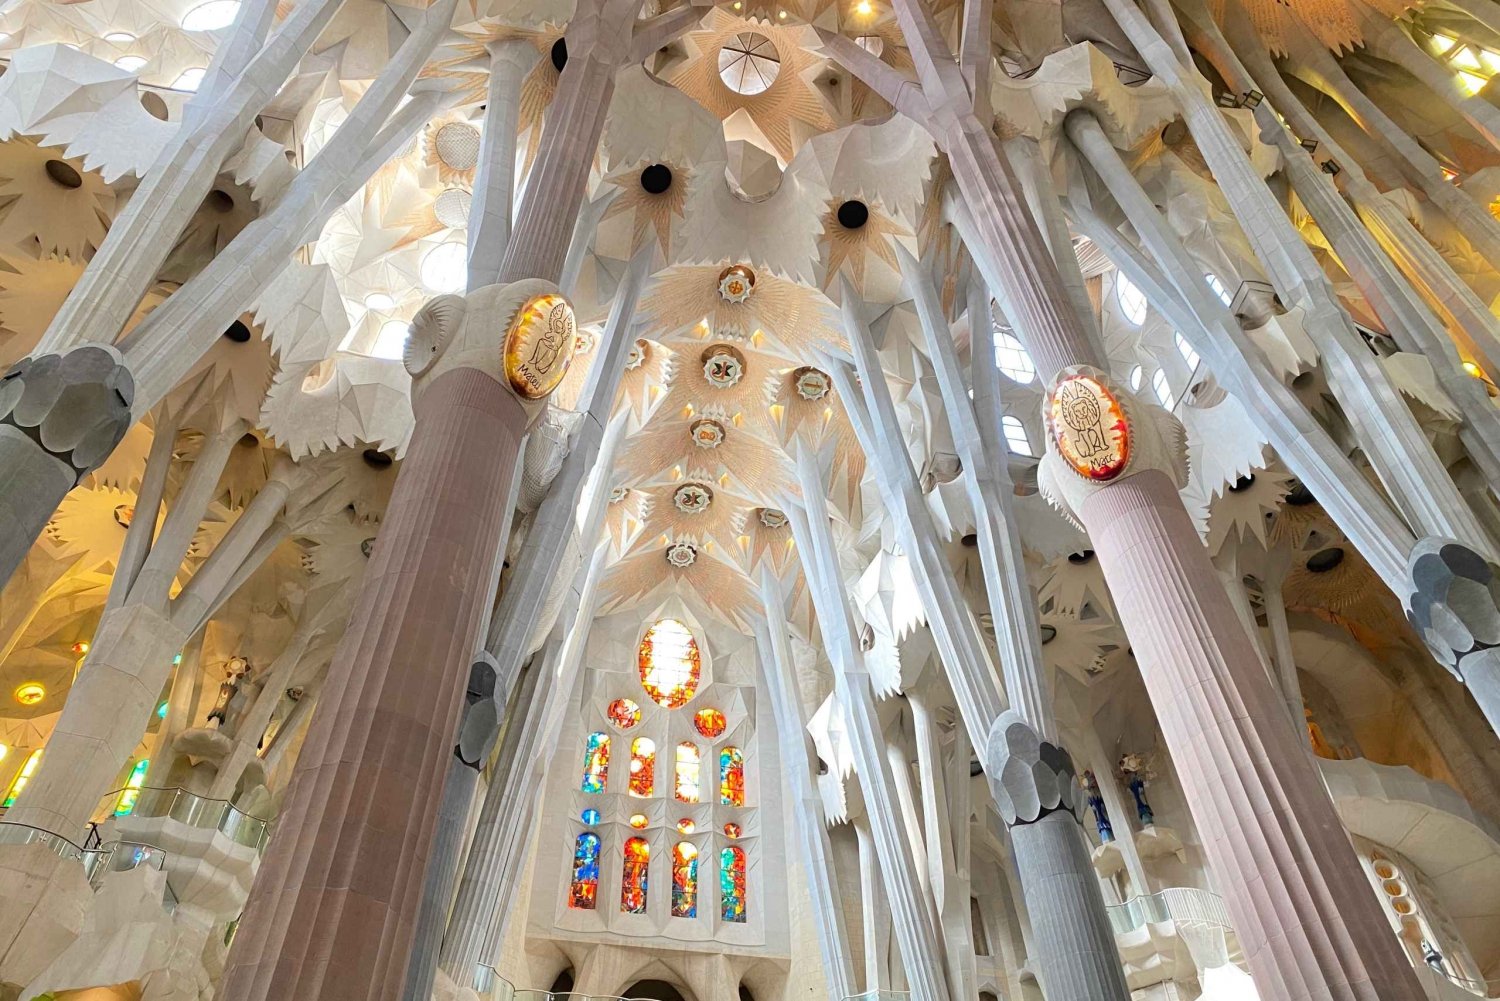 Barcelona: Sagrada Família and Gaudí Houses Tour